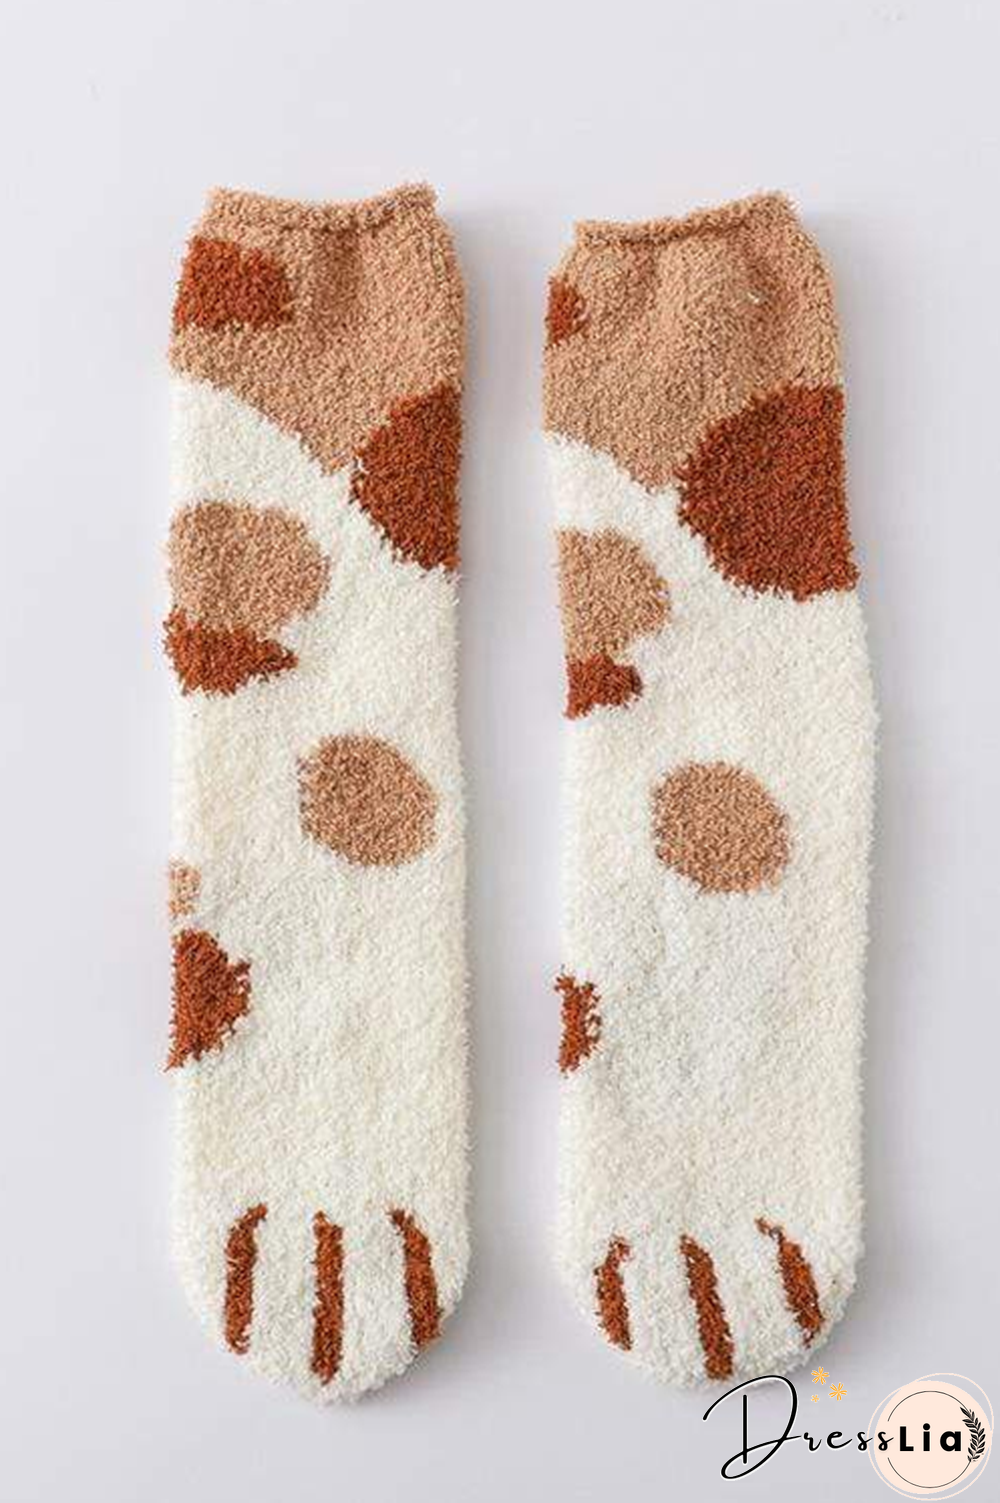 Cat Claws Cute Thick Warm Sleep Floor Socks